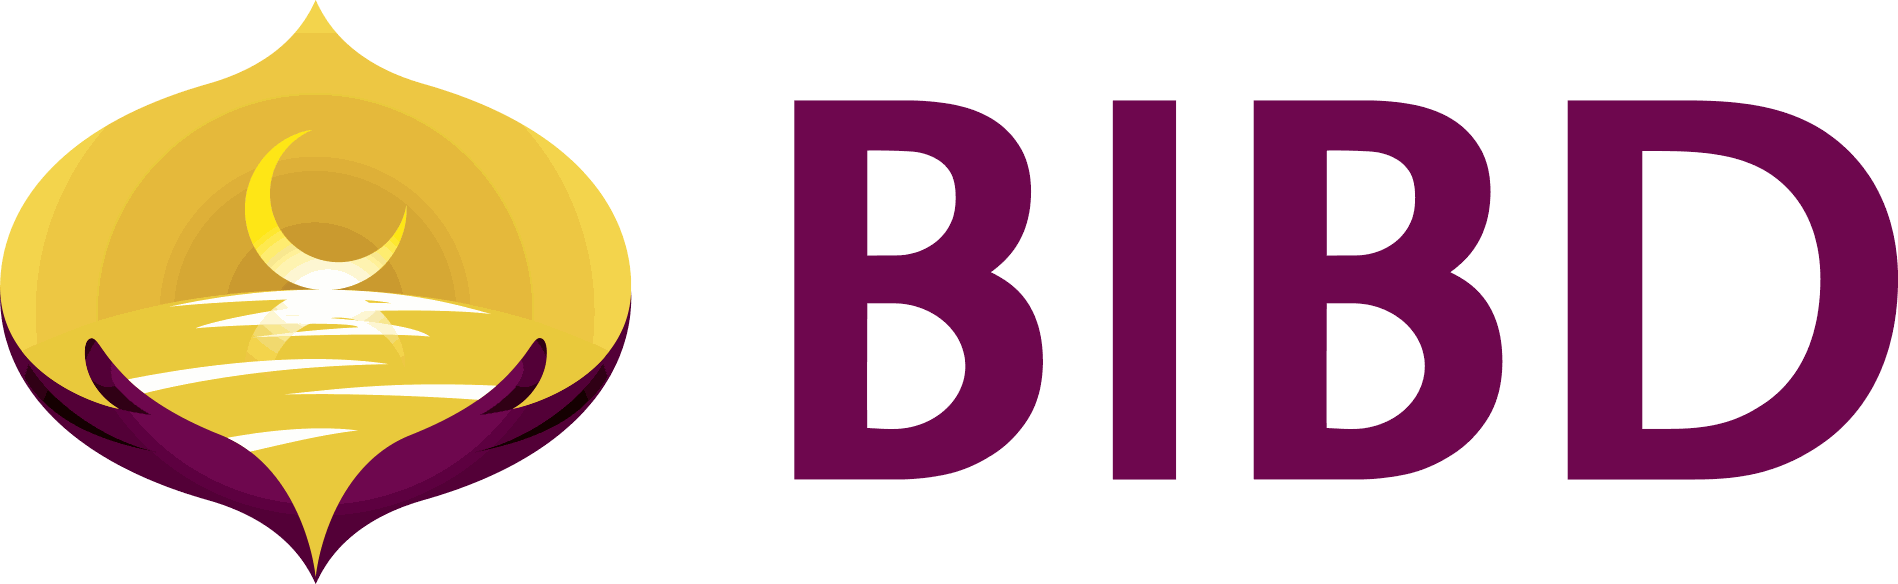 BIBD Logo